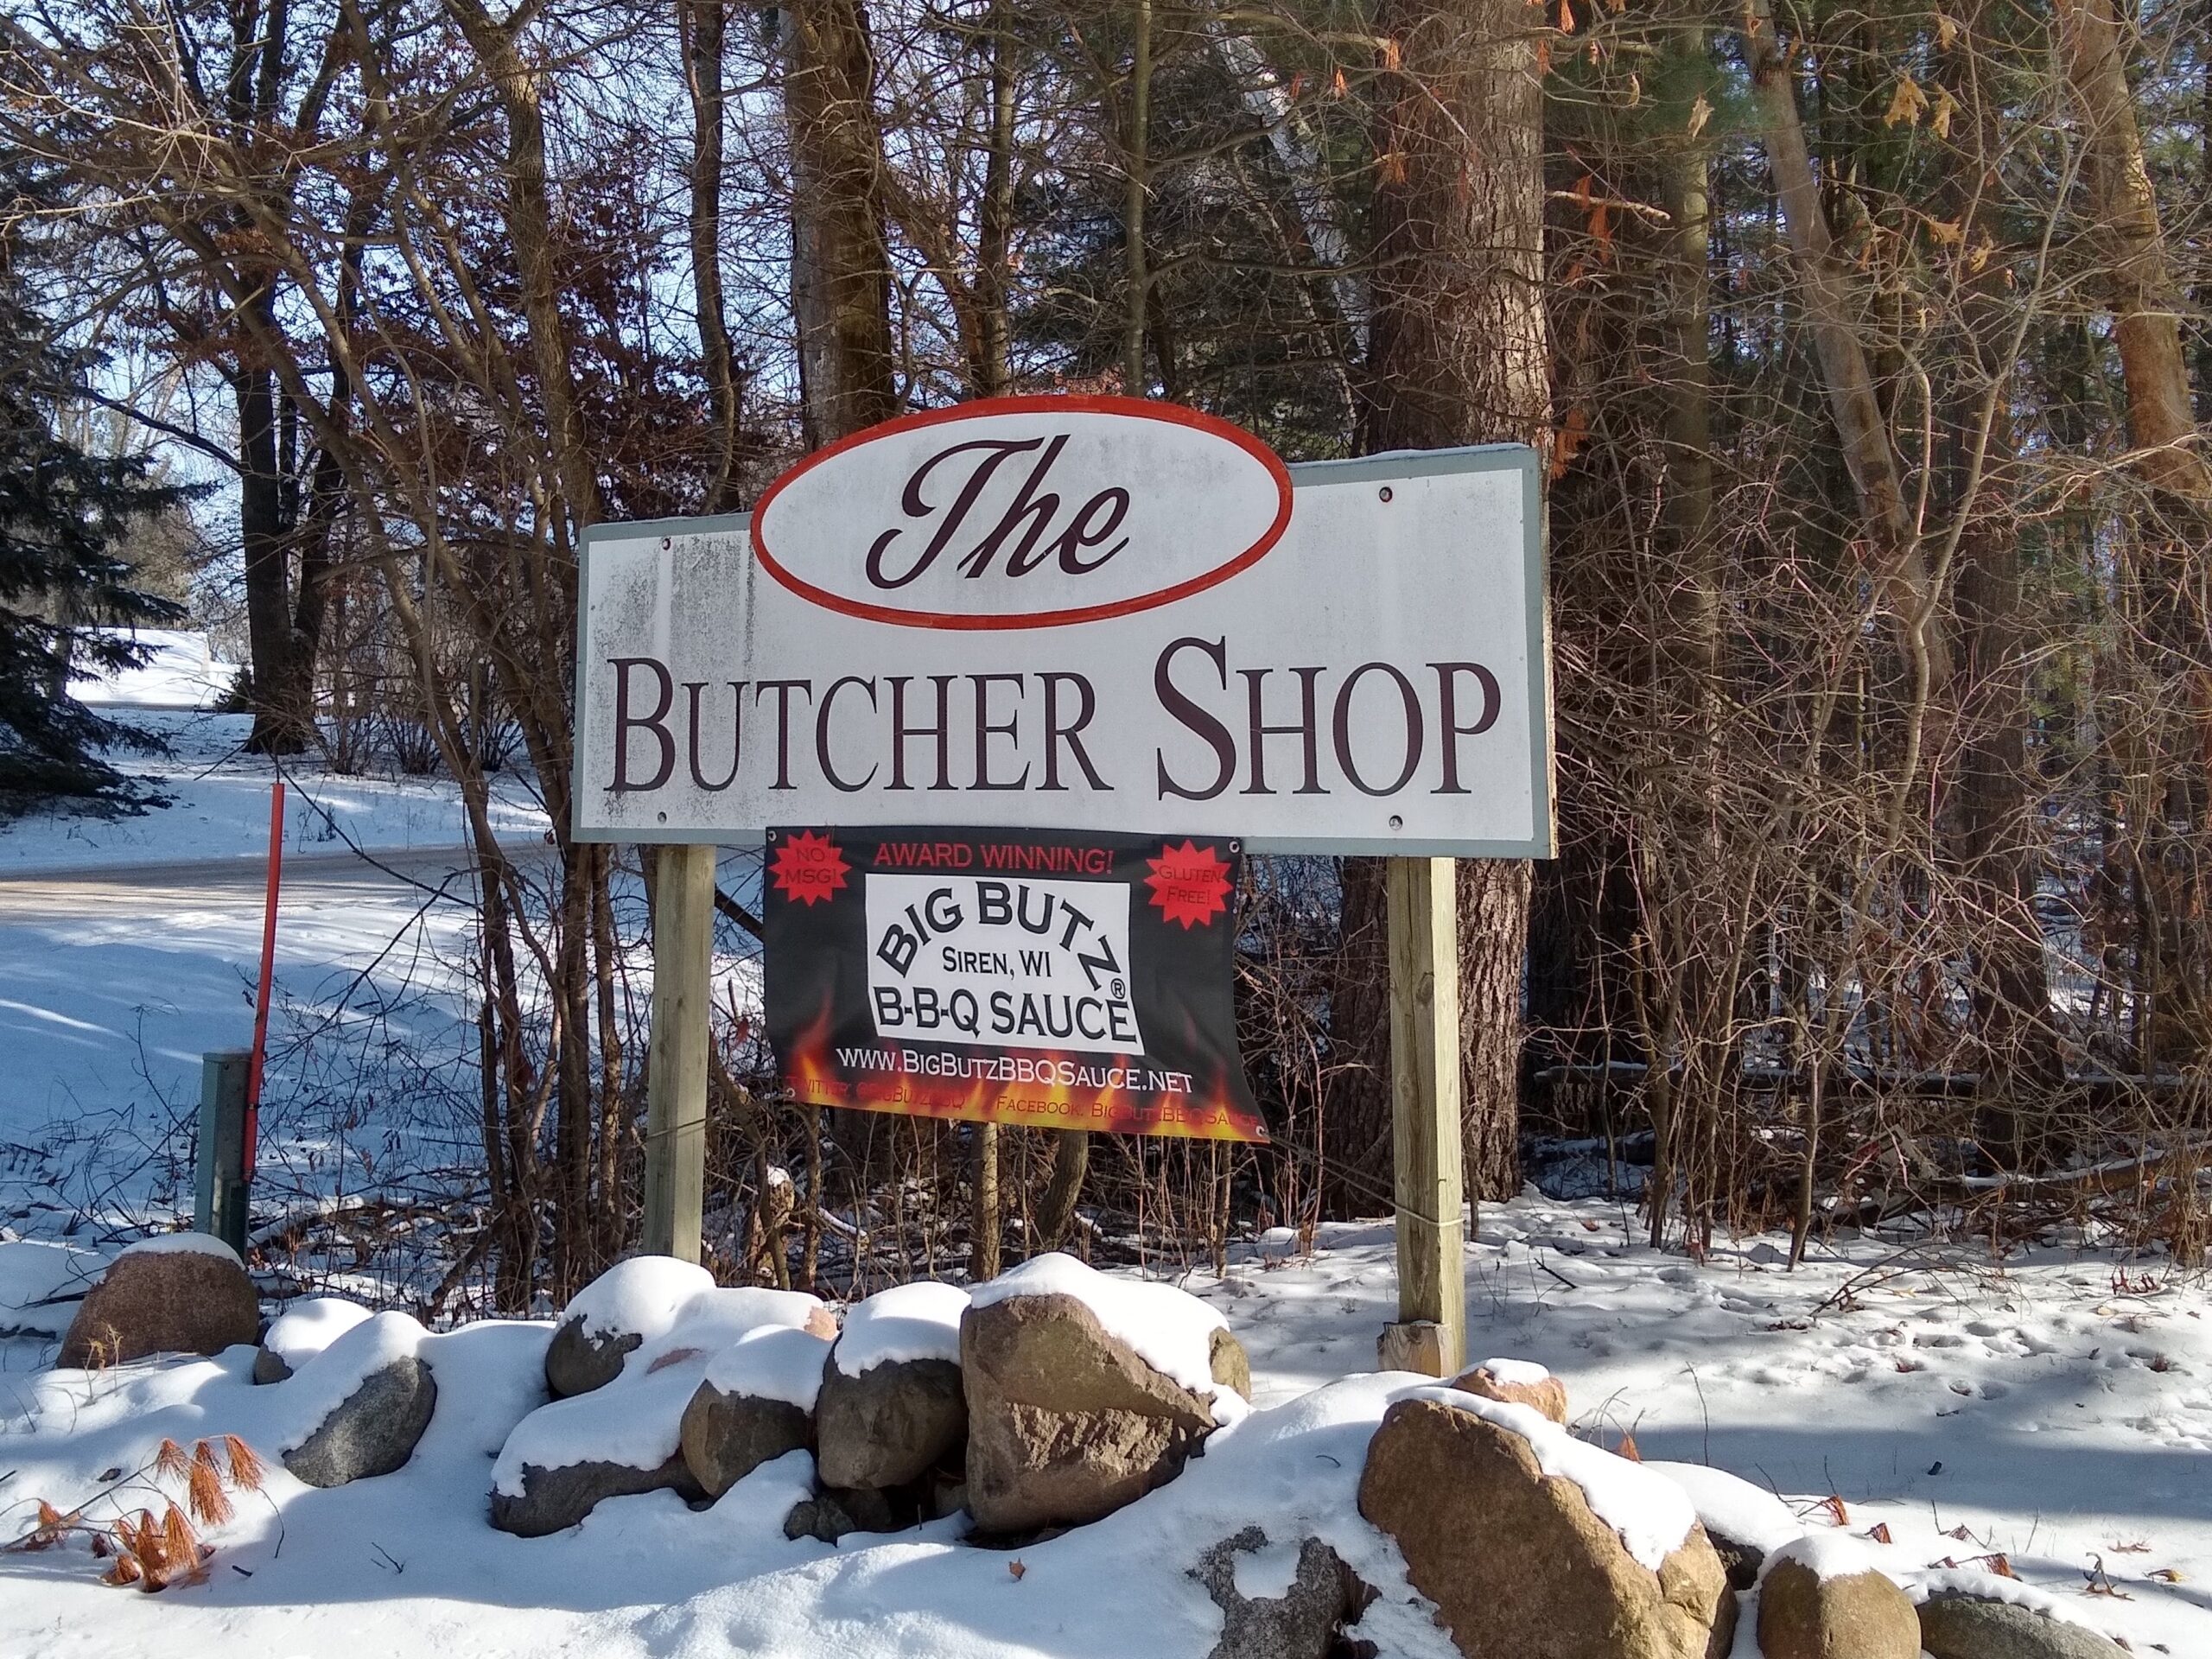 Butcher Shop sign